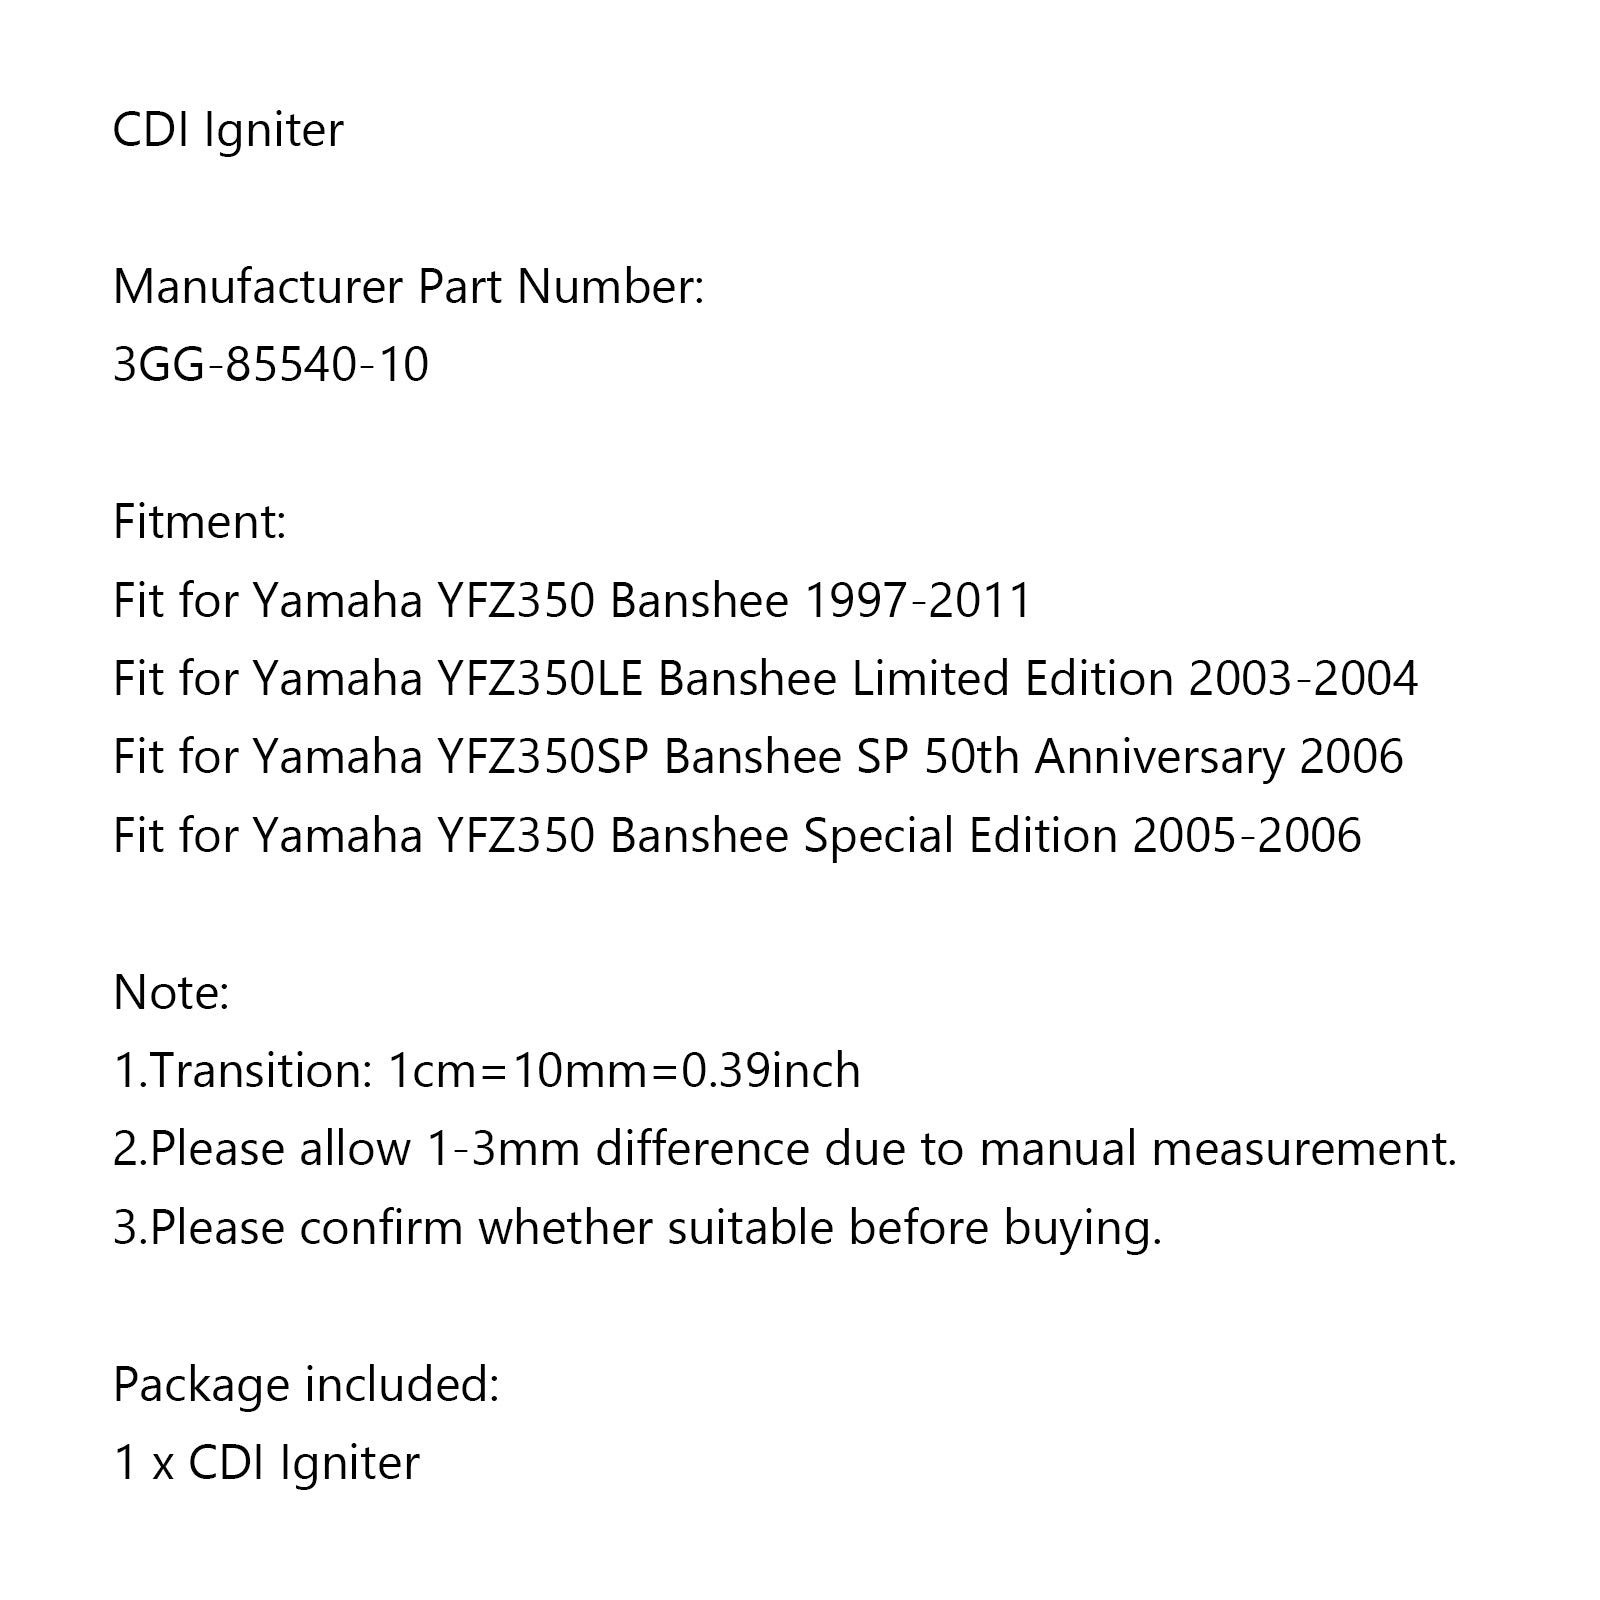 CDI Igniter fit for Yamaha YFZ350 Banshee YFZ350LE YFZ350SP 3GG-85540-10